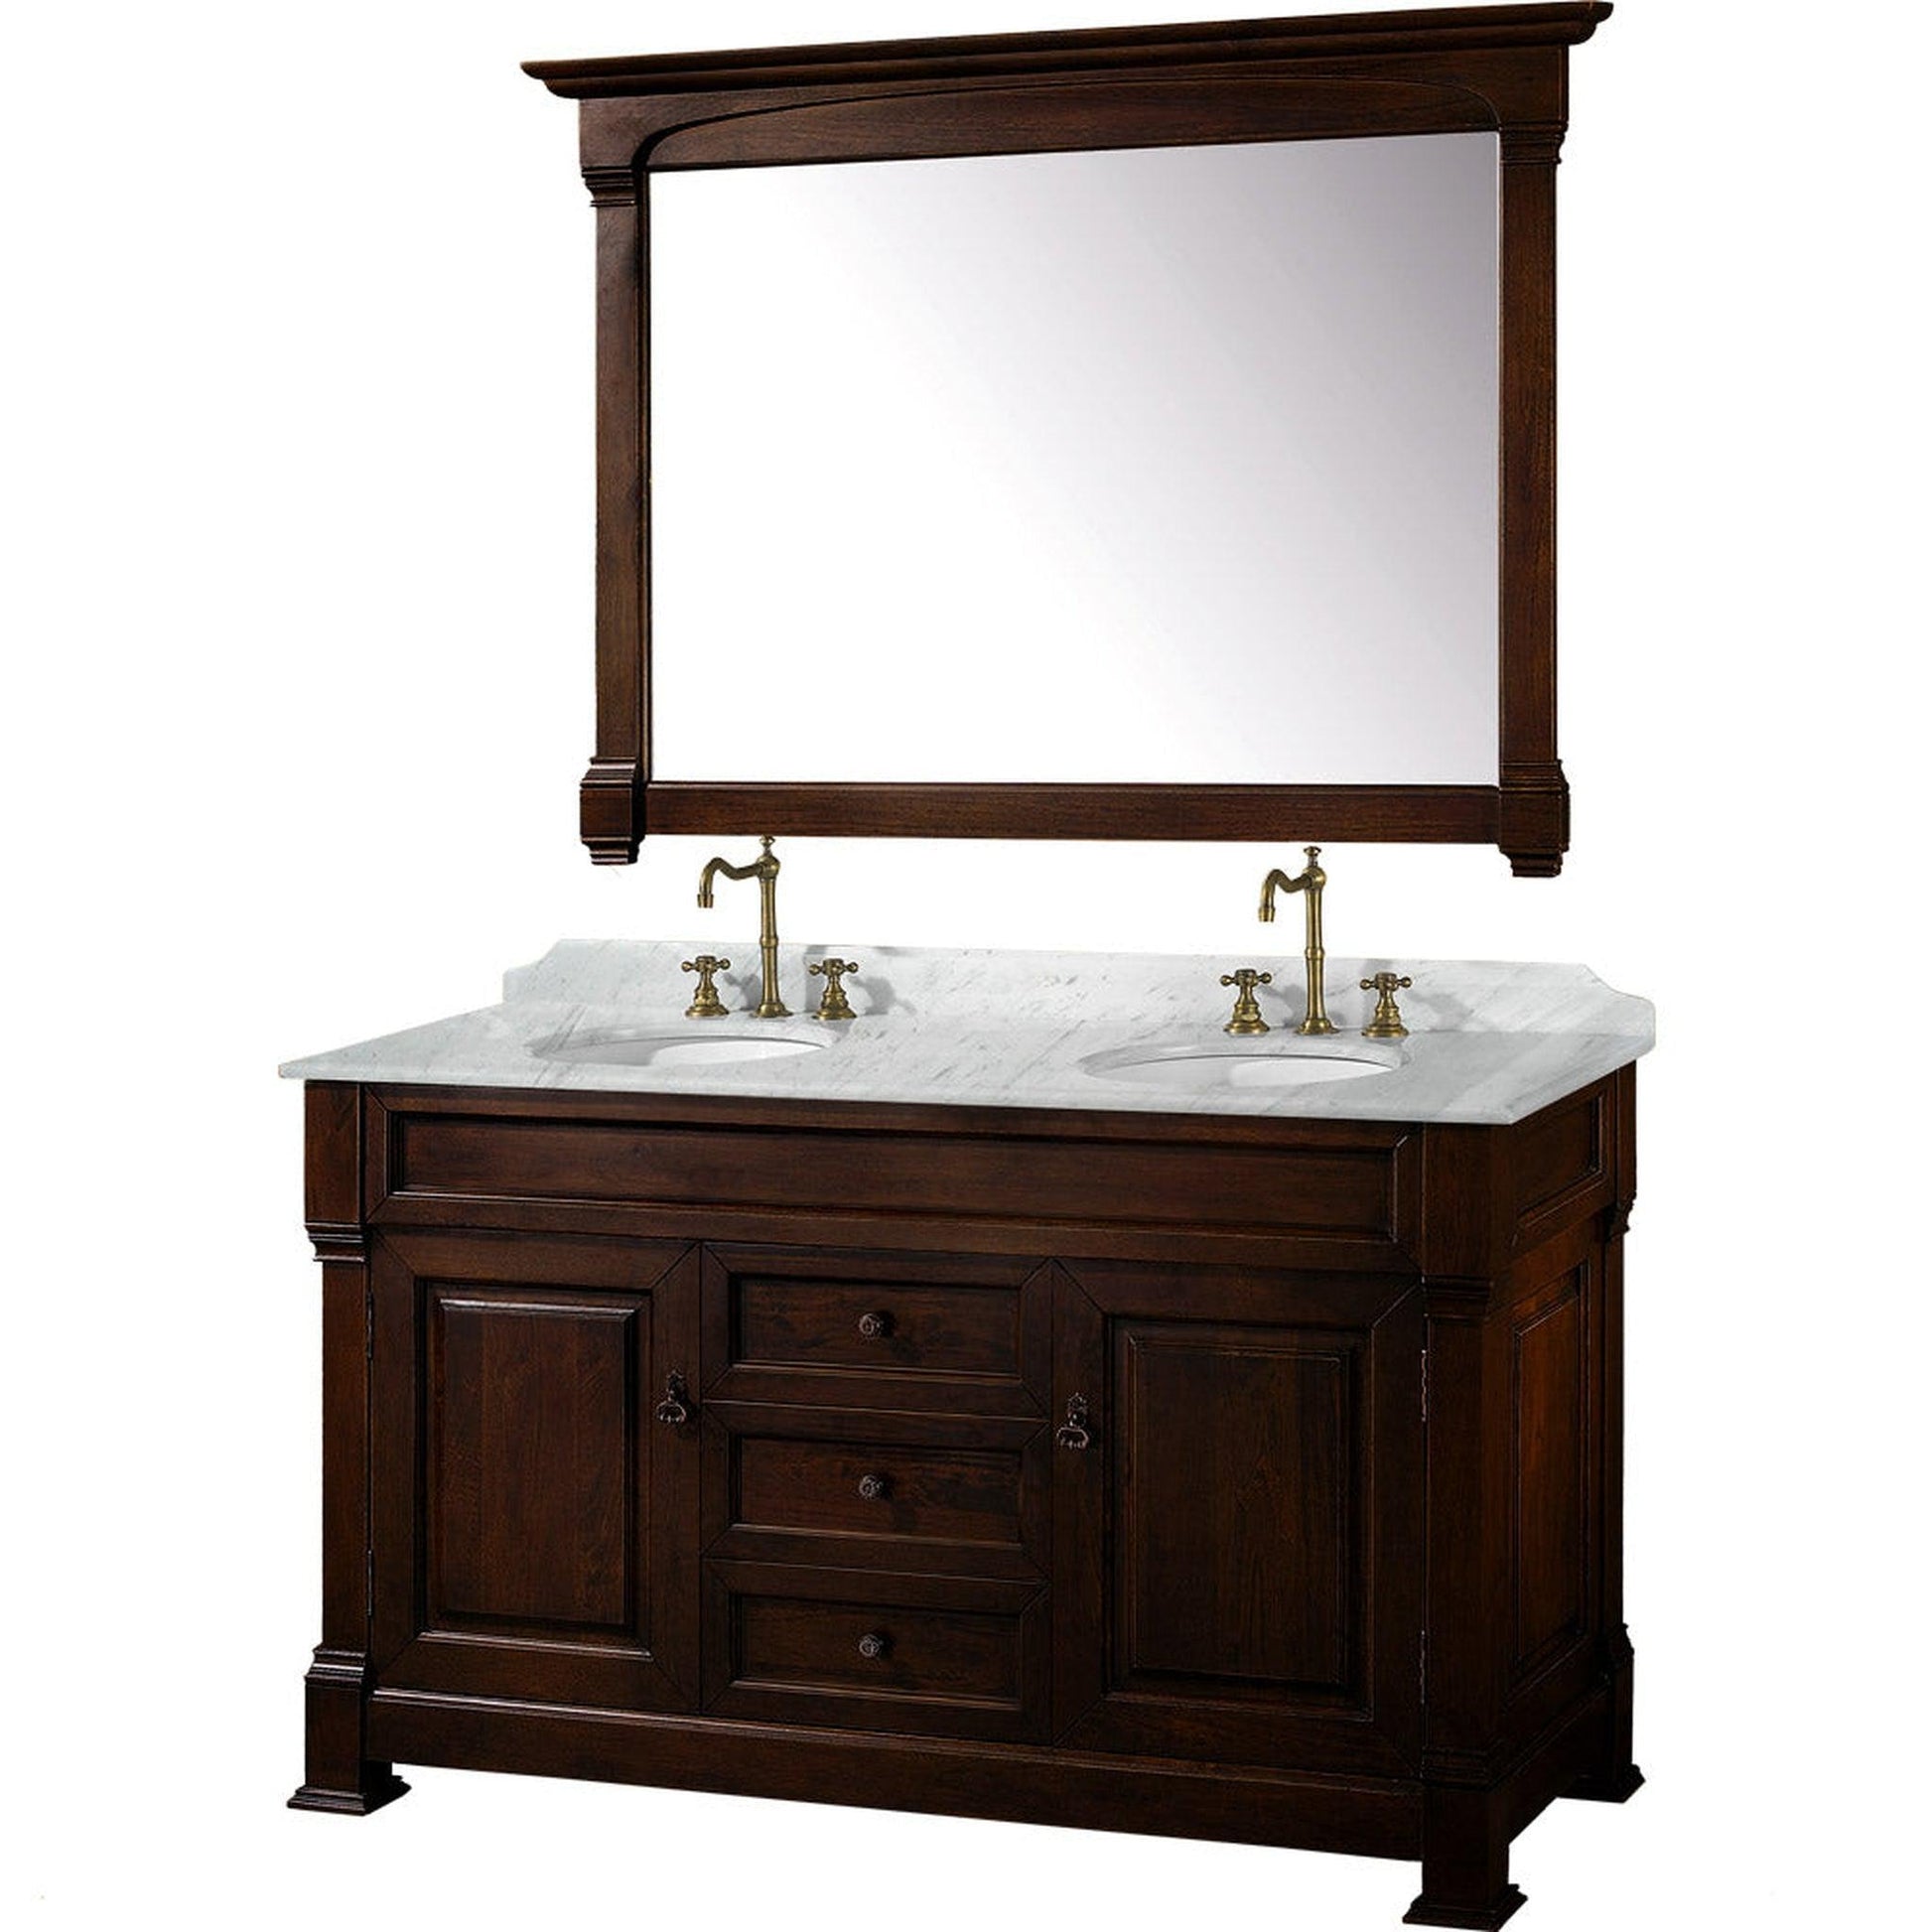 Wyndham Collection Andover 60" Double Bathroom Vanity in Dark Cherry With White Carrara Marble Countertop, Undermount Oval Sink & 56" Mirror